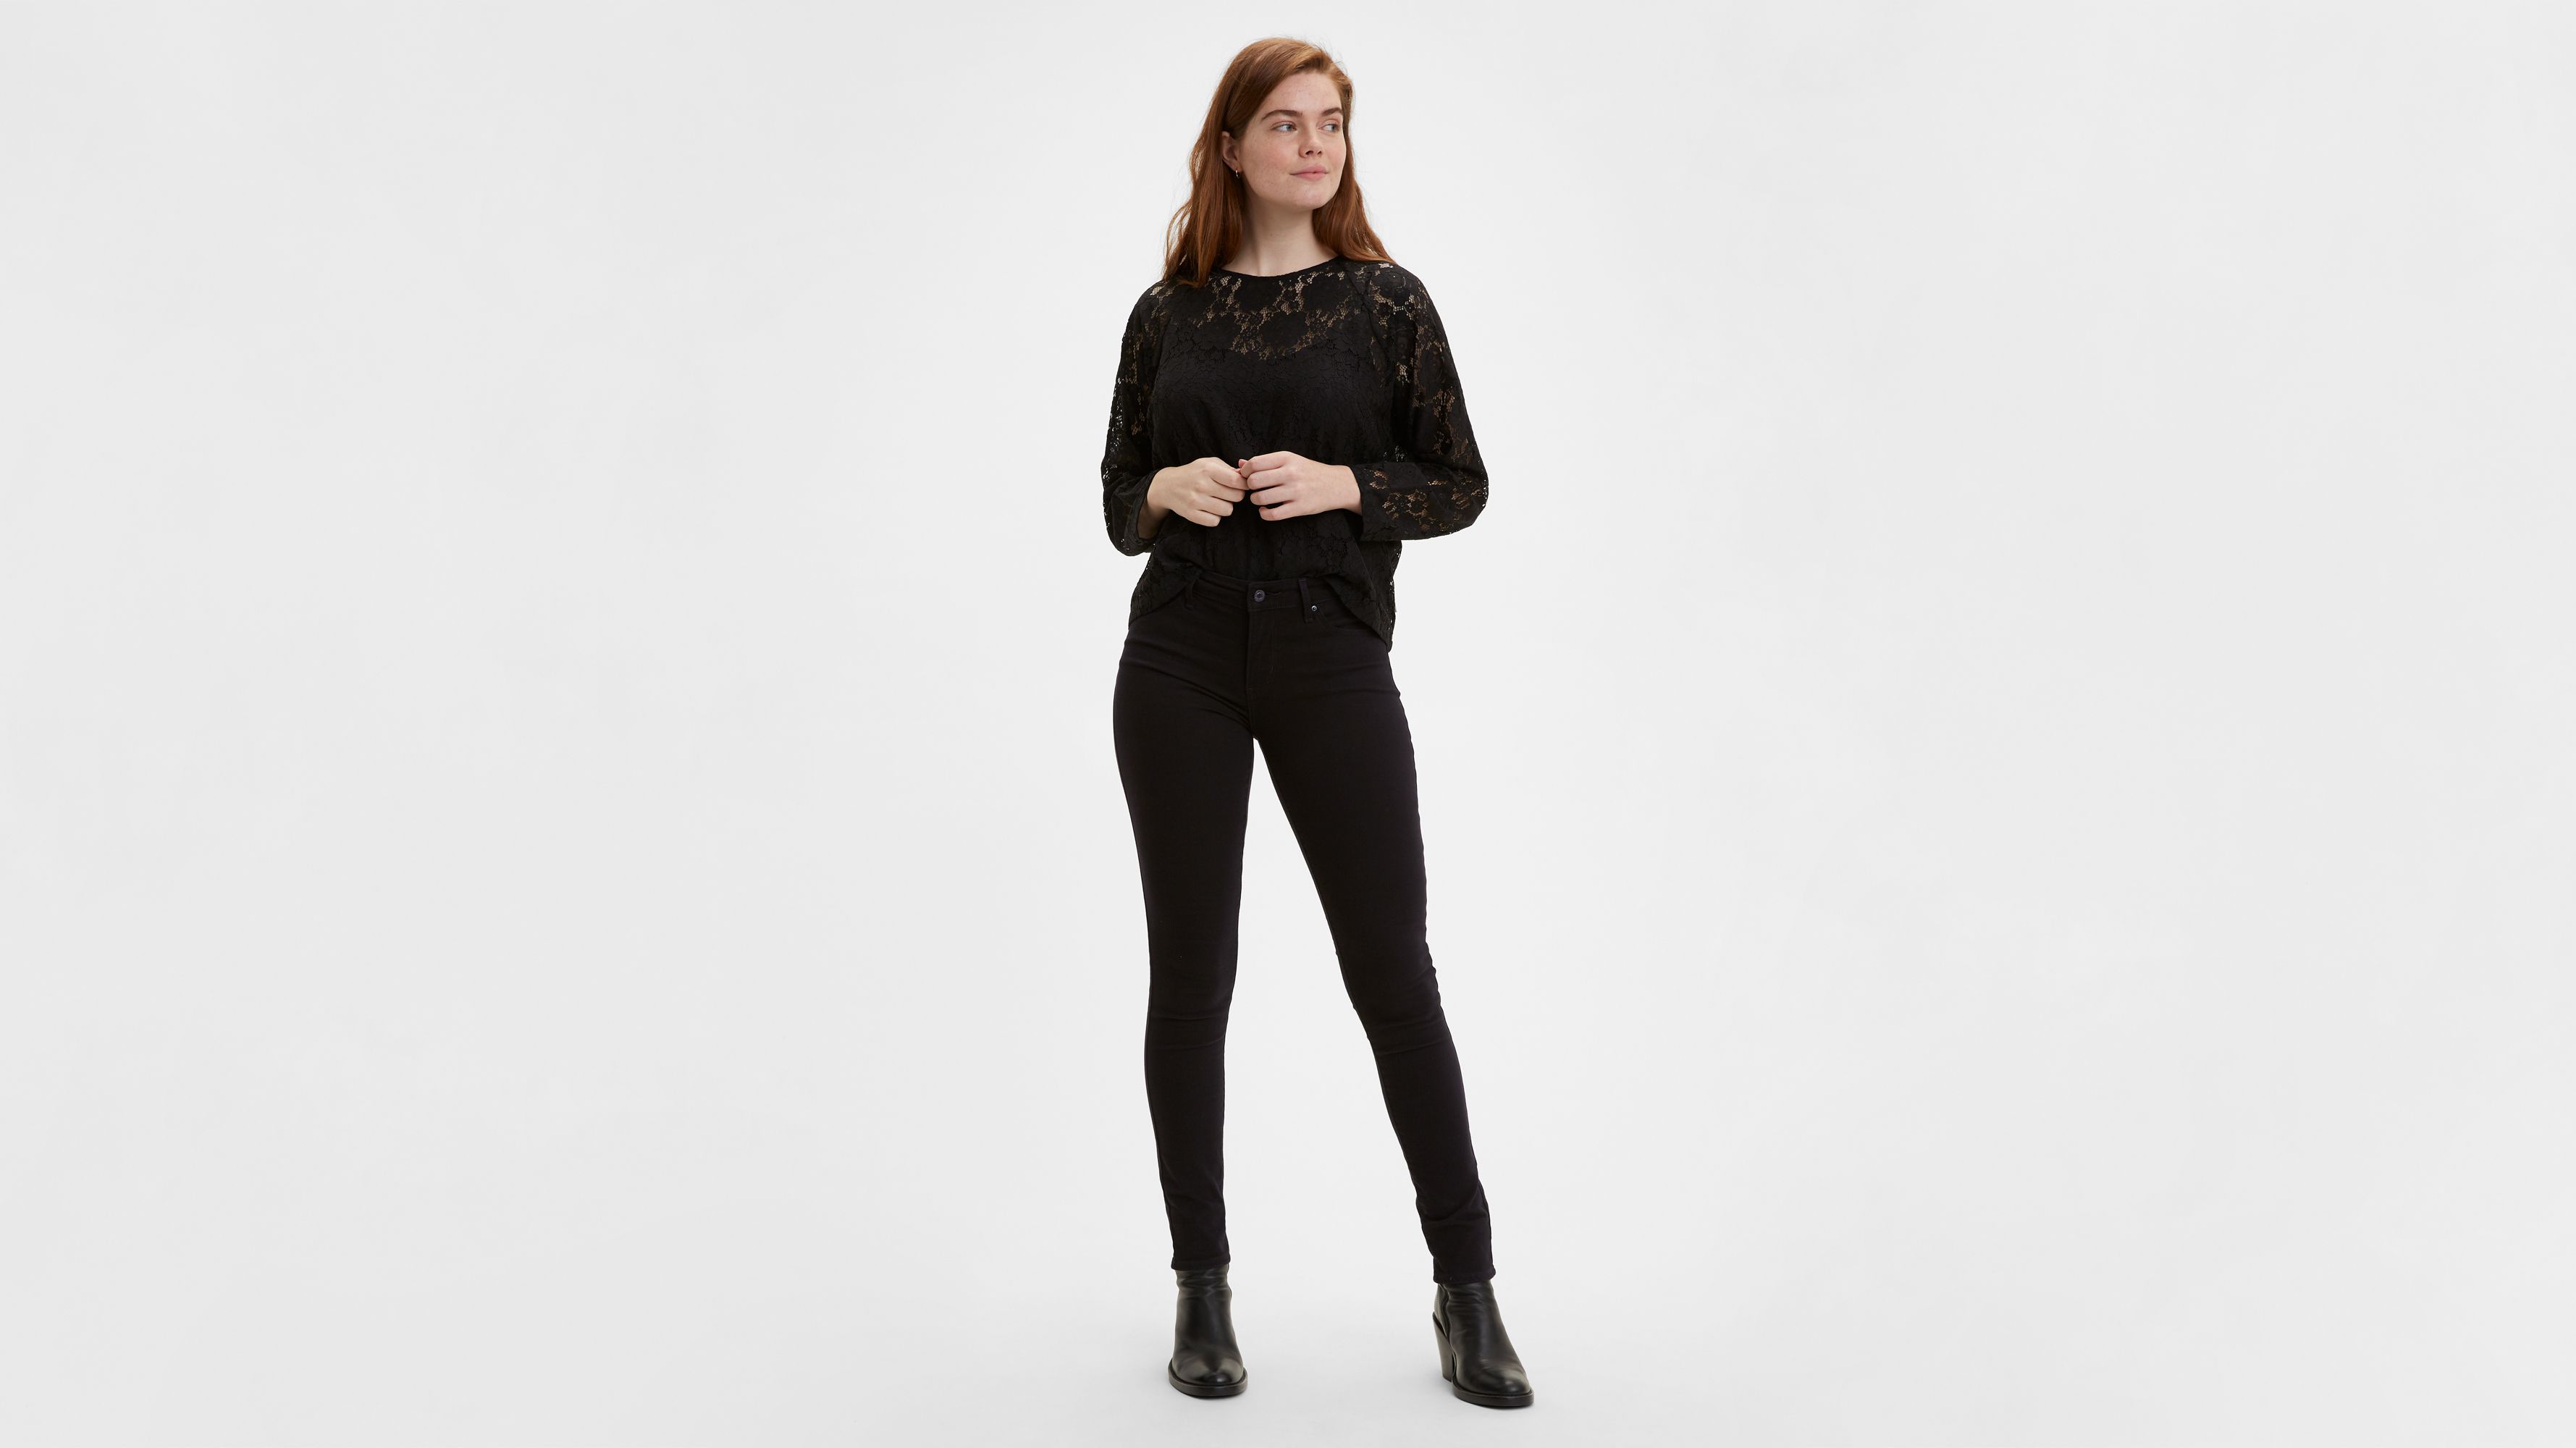 711™ Skinny Jeans - Zwart | Levi's® NL